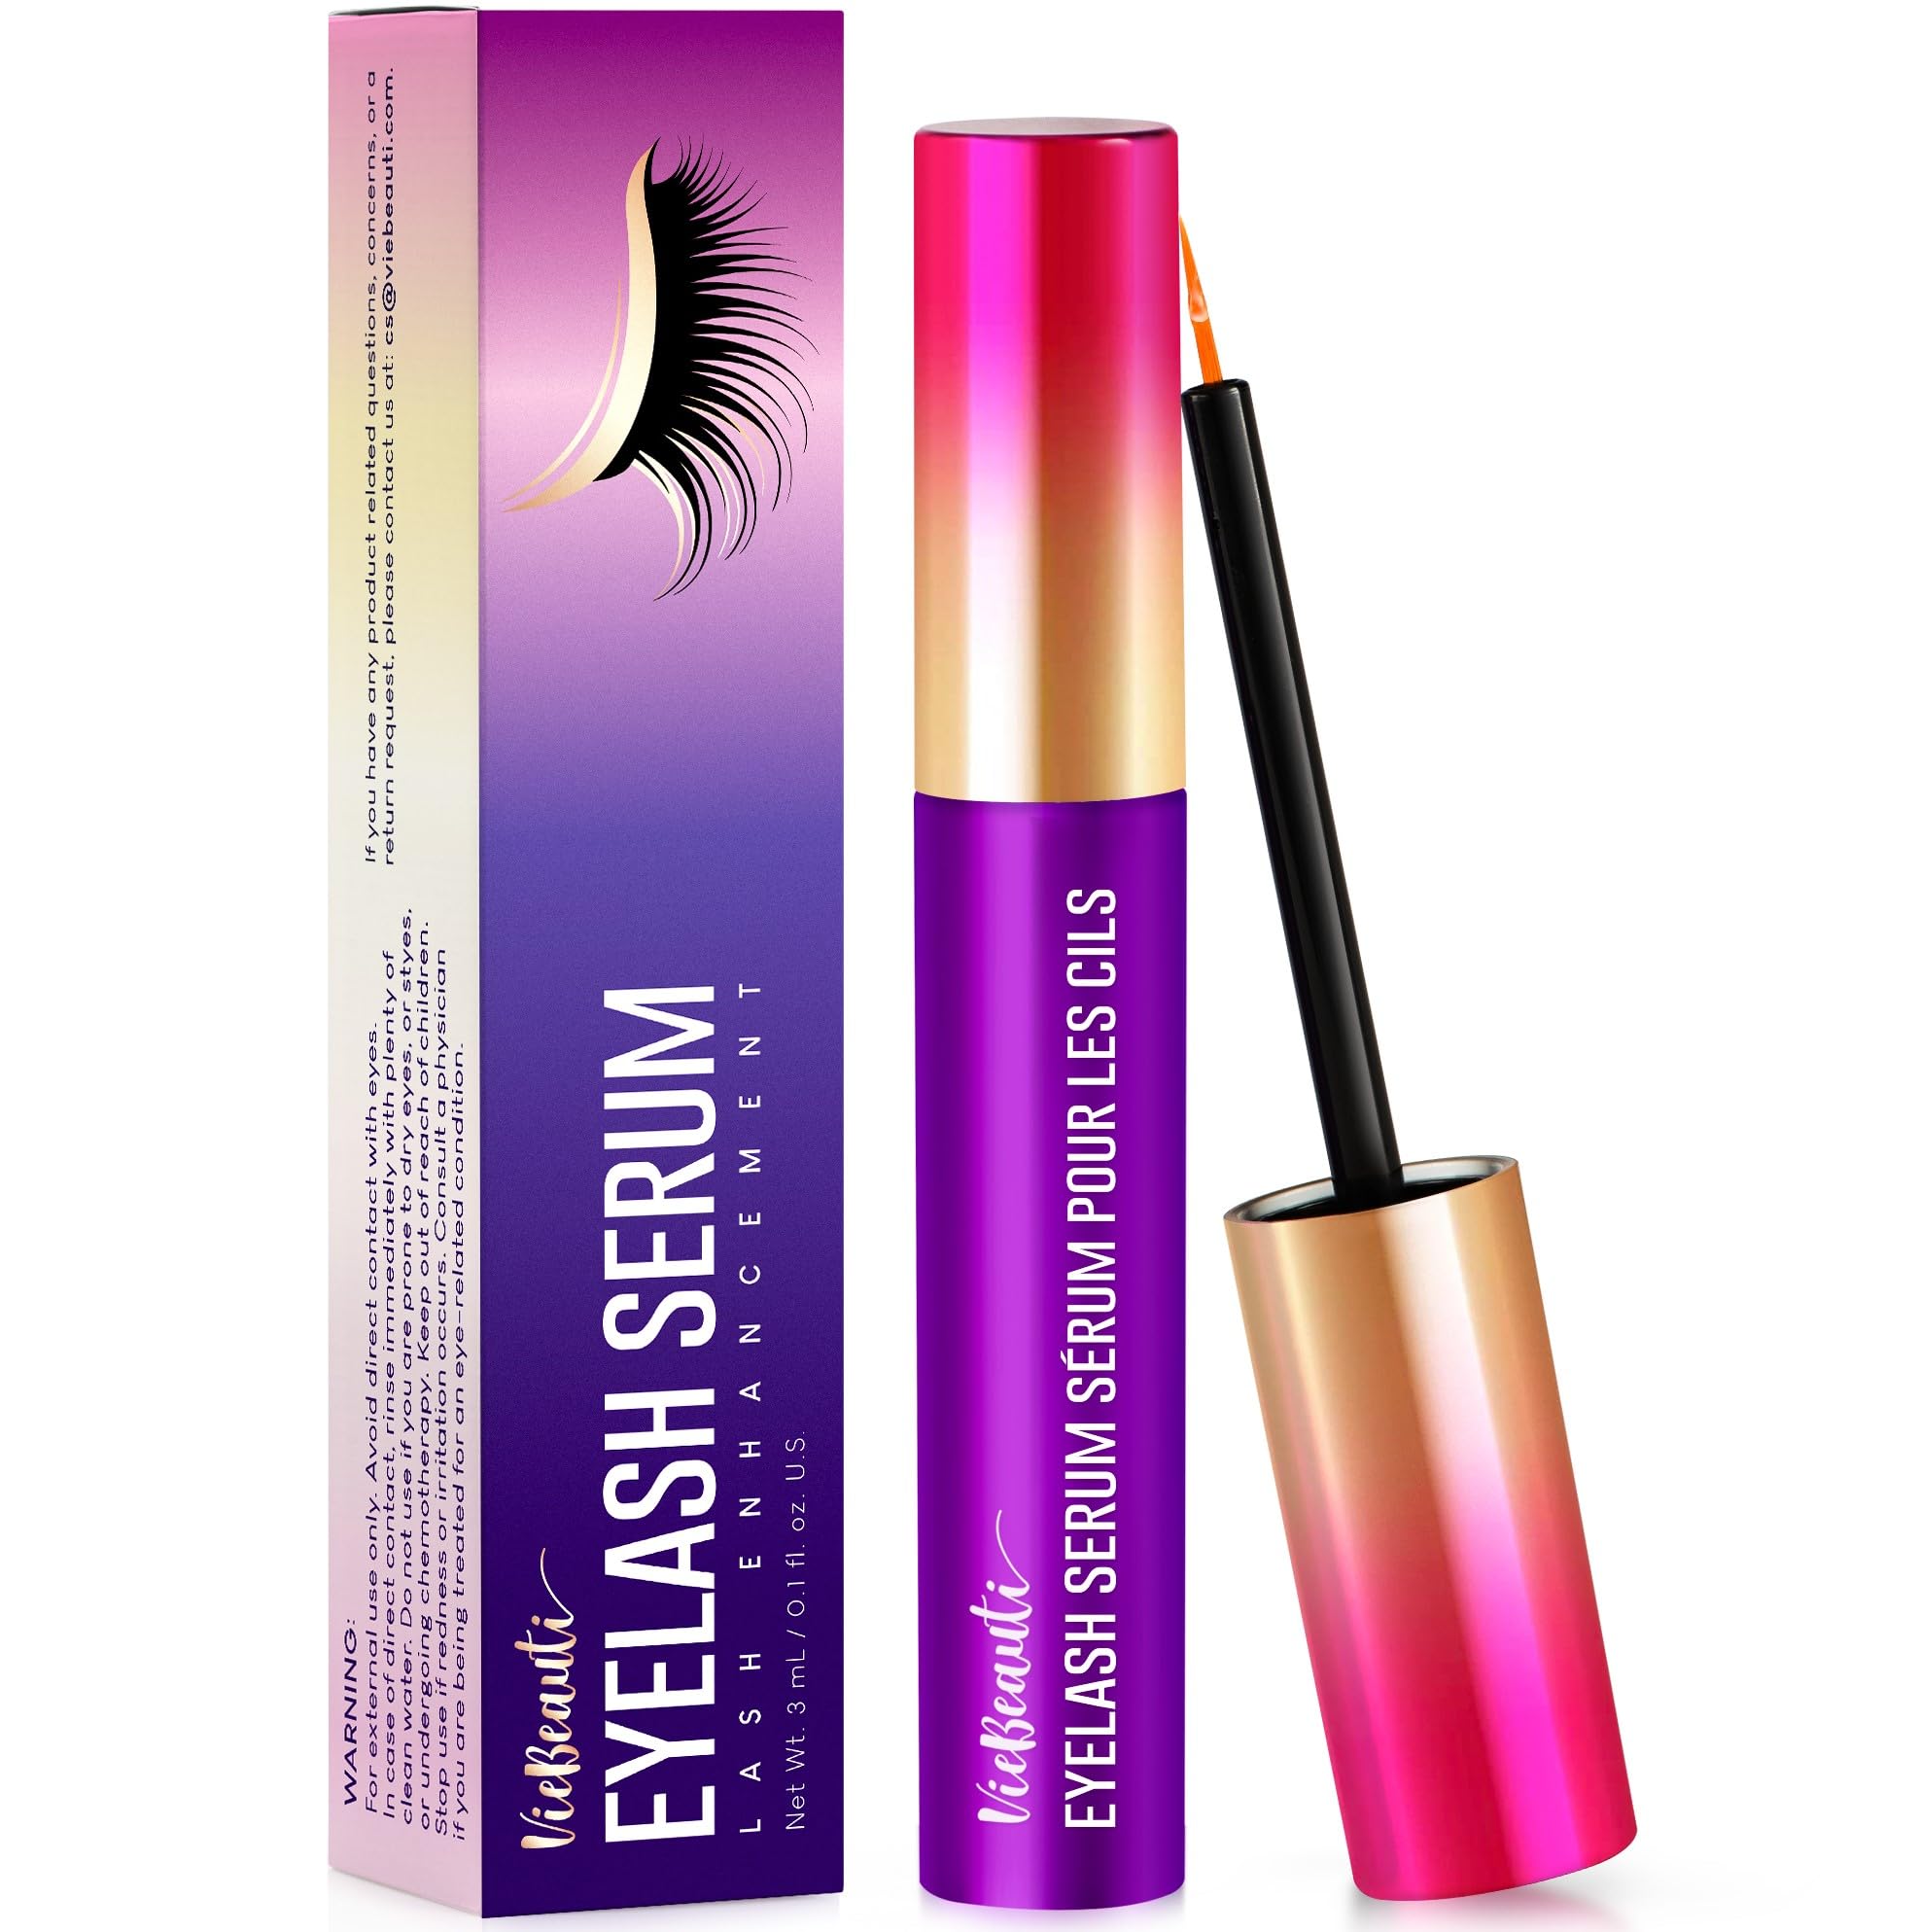 Premium Eyelash Serum by VieBeauti, Lash Boosting Serum for Longer, Fuller Thicker Looking Lashes (3ML), (Packaging May Vary)